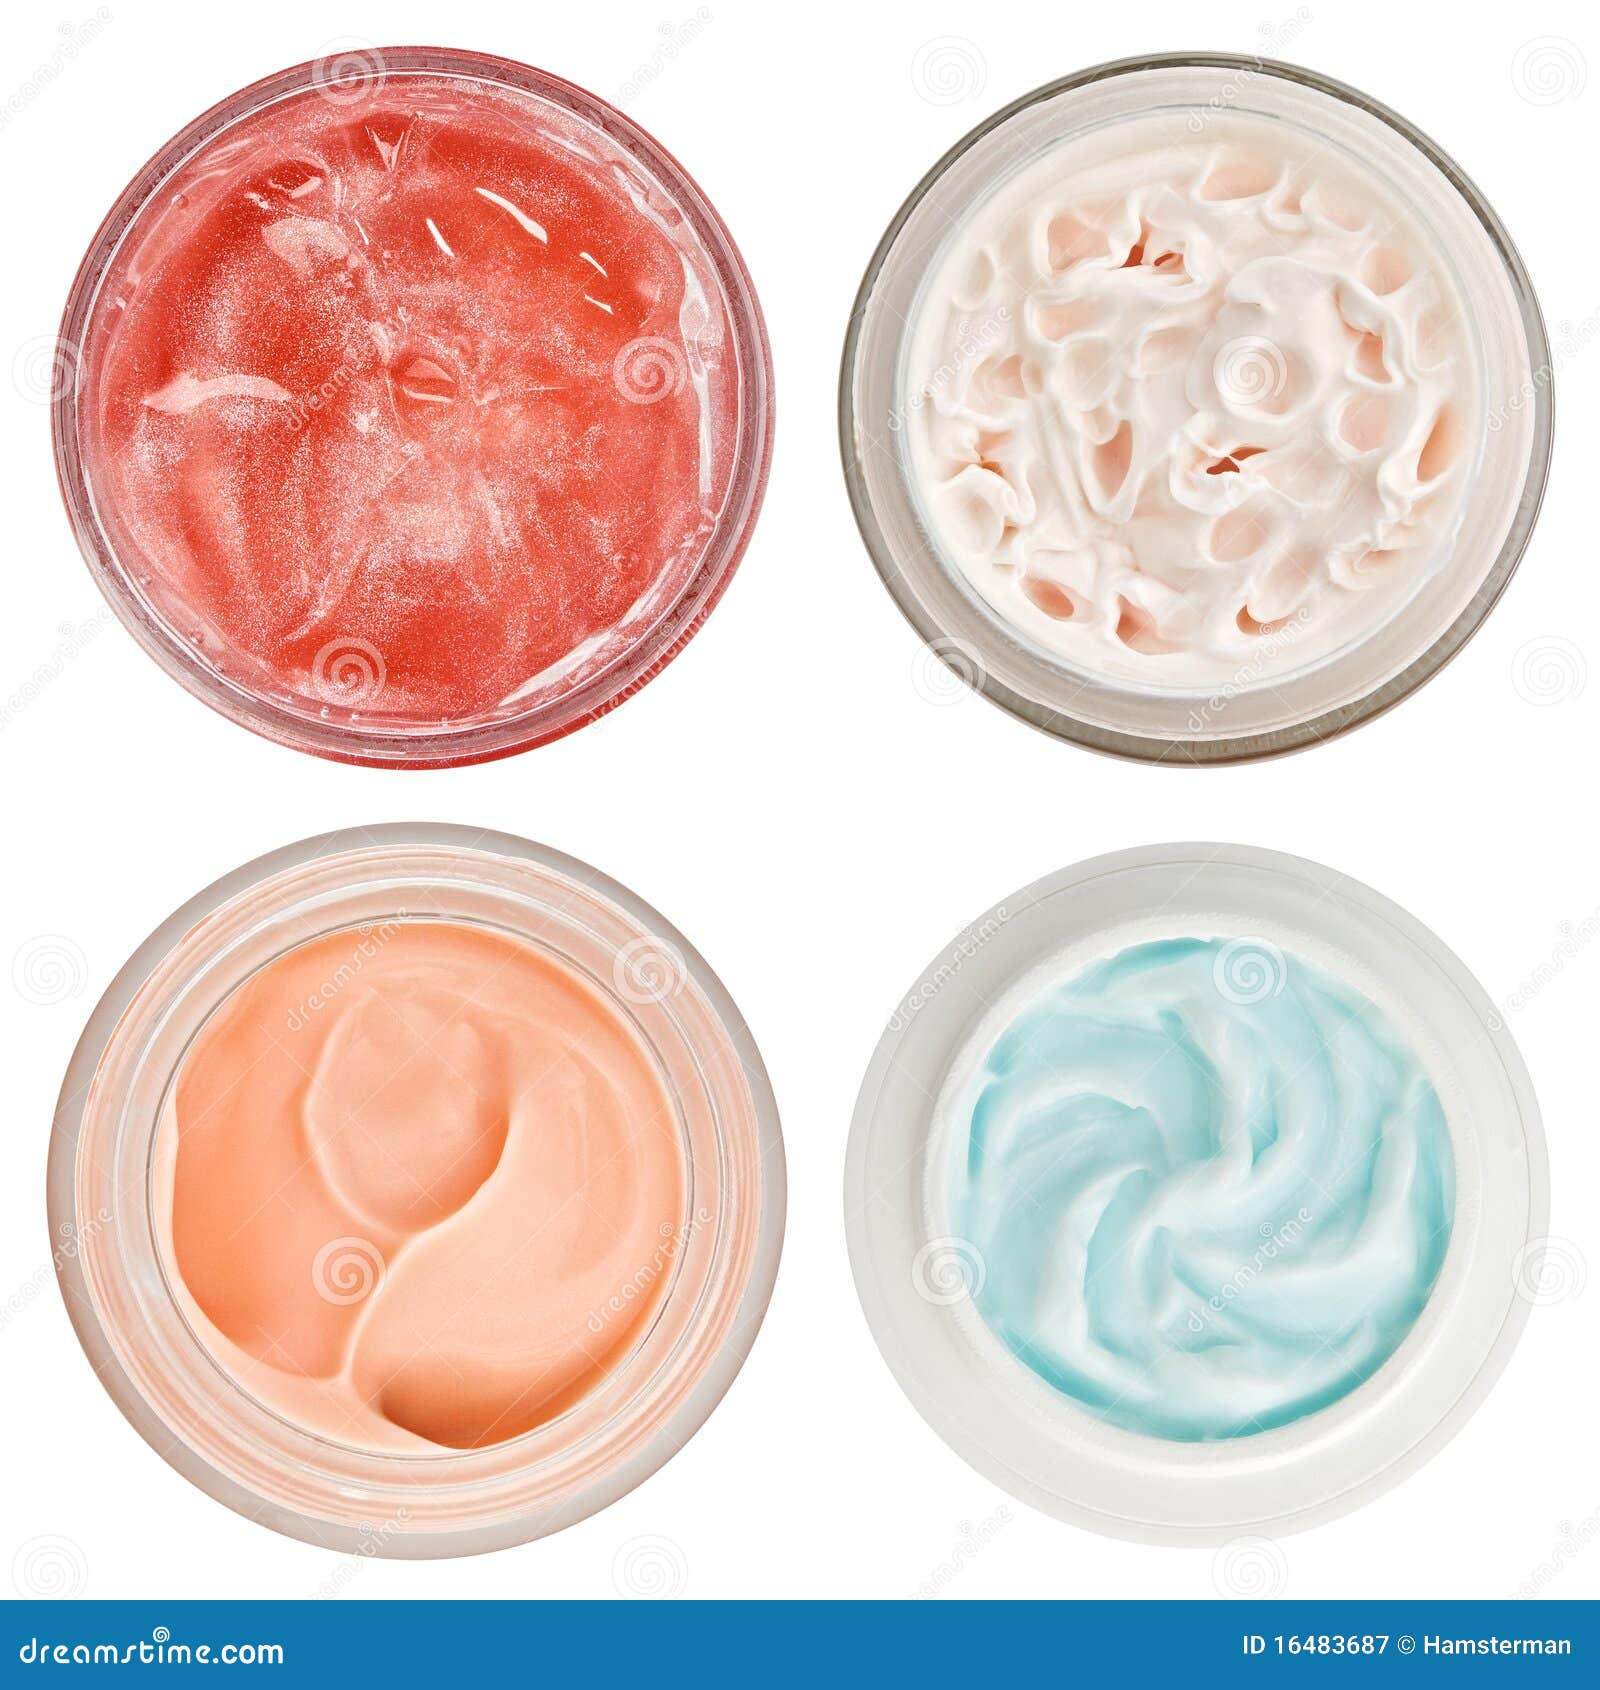 set of 4 different dermal creams and gels